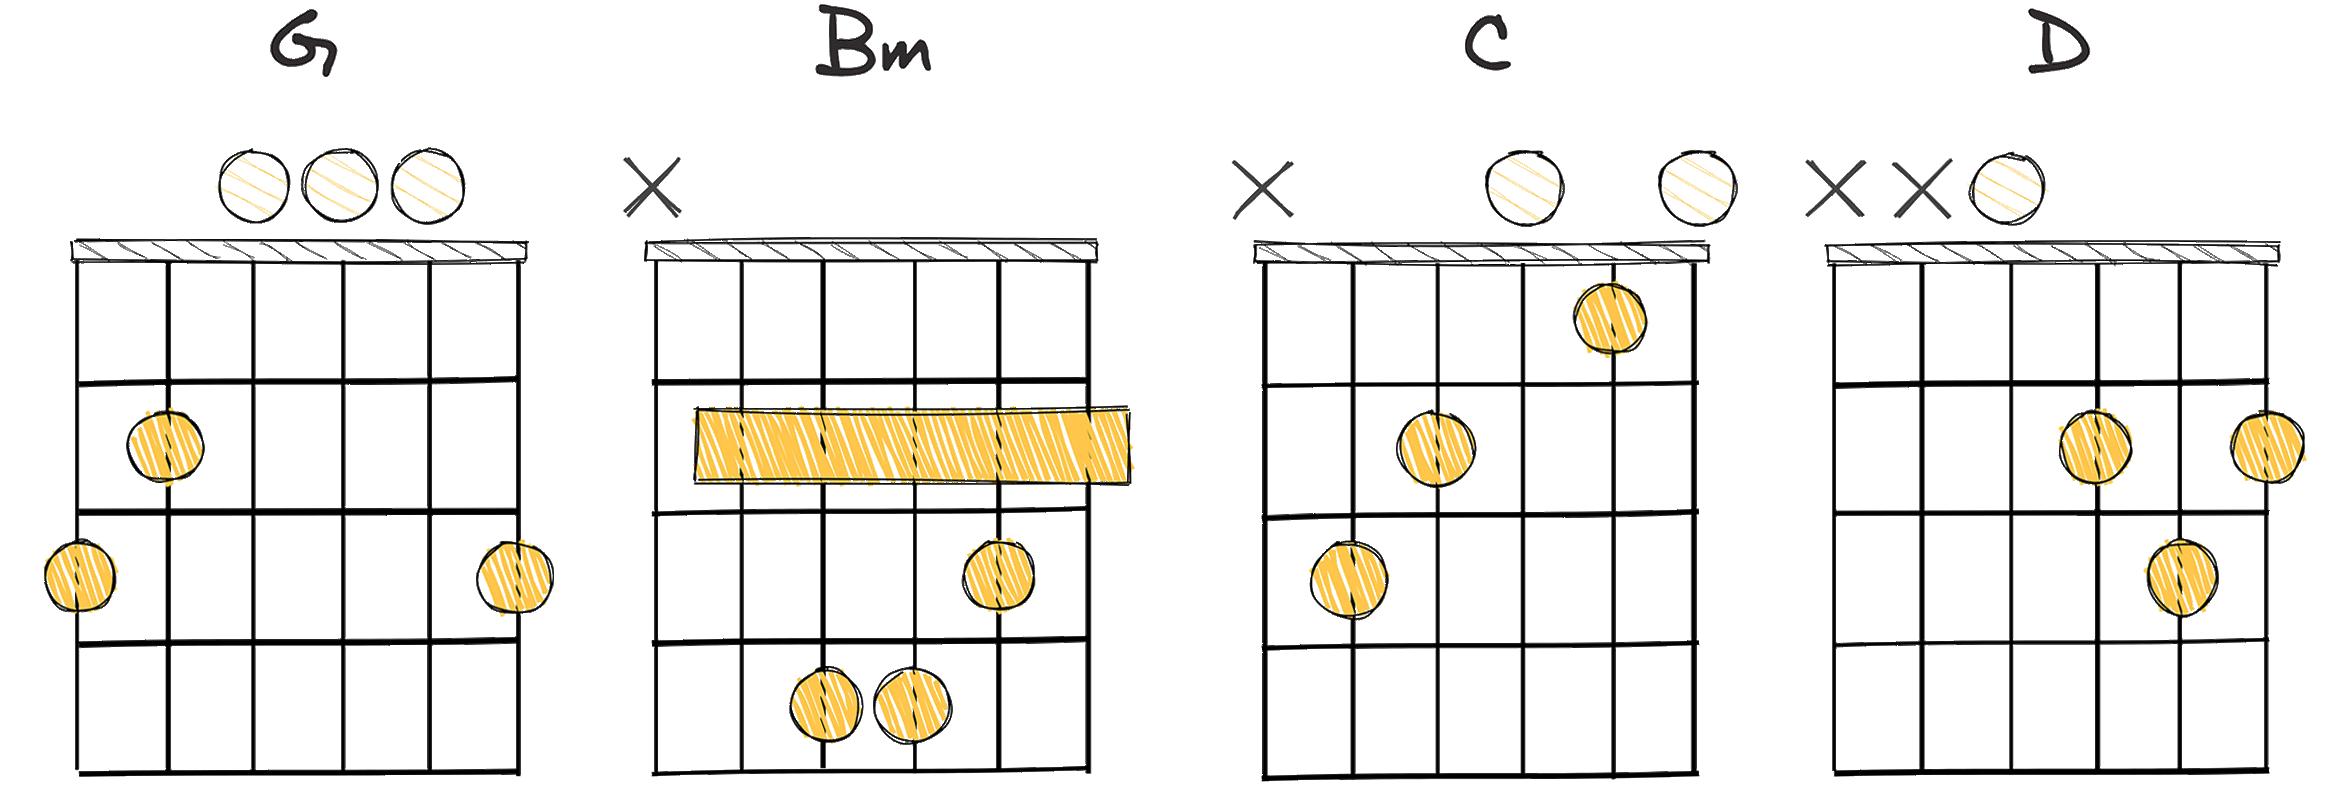 I-iii-IV-V (1-3-4-5) chords diagram